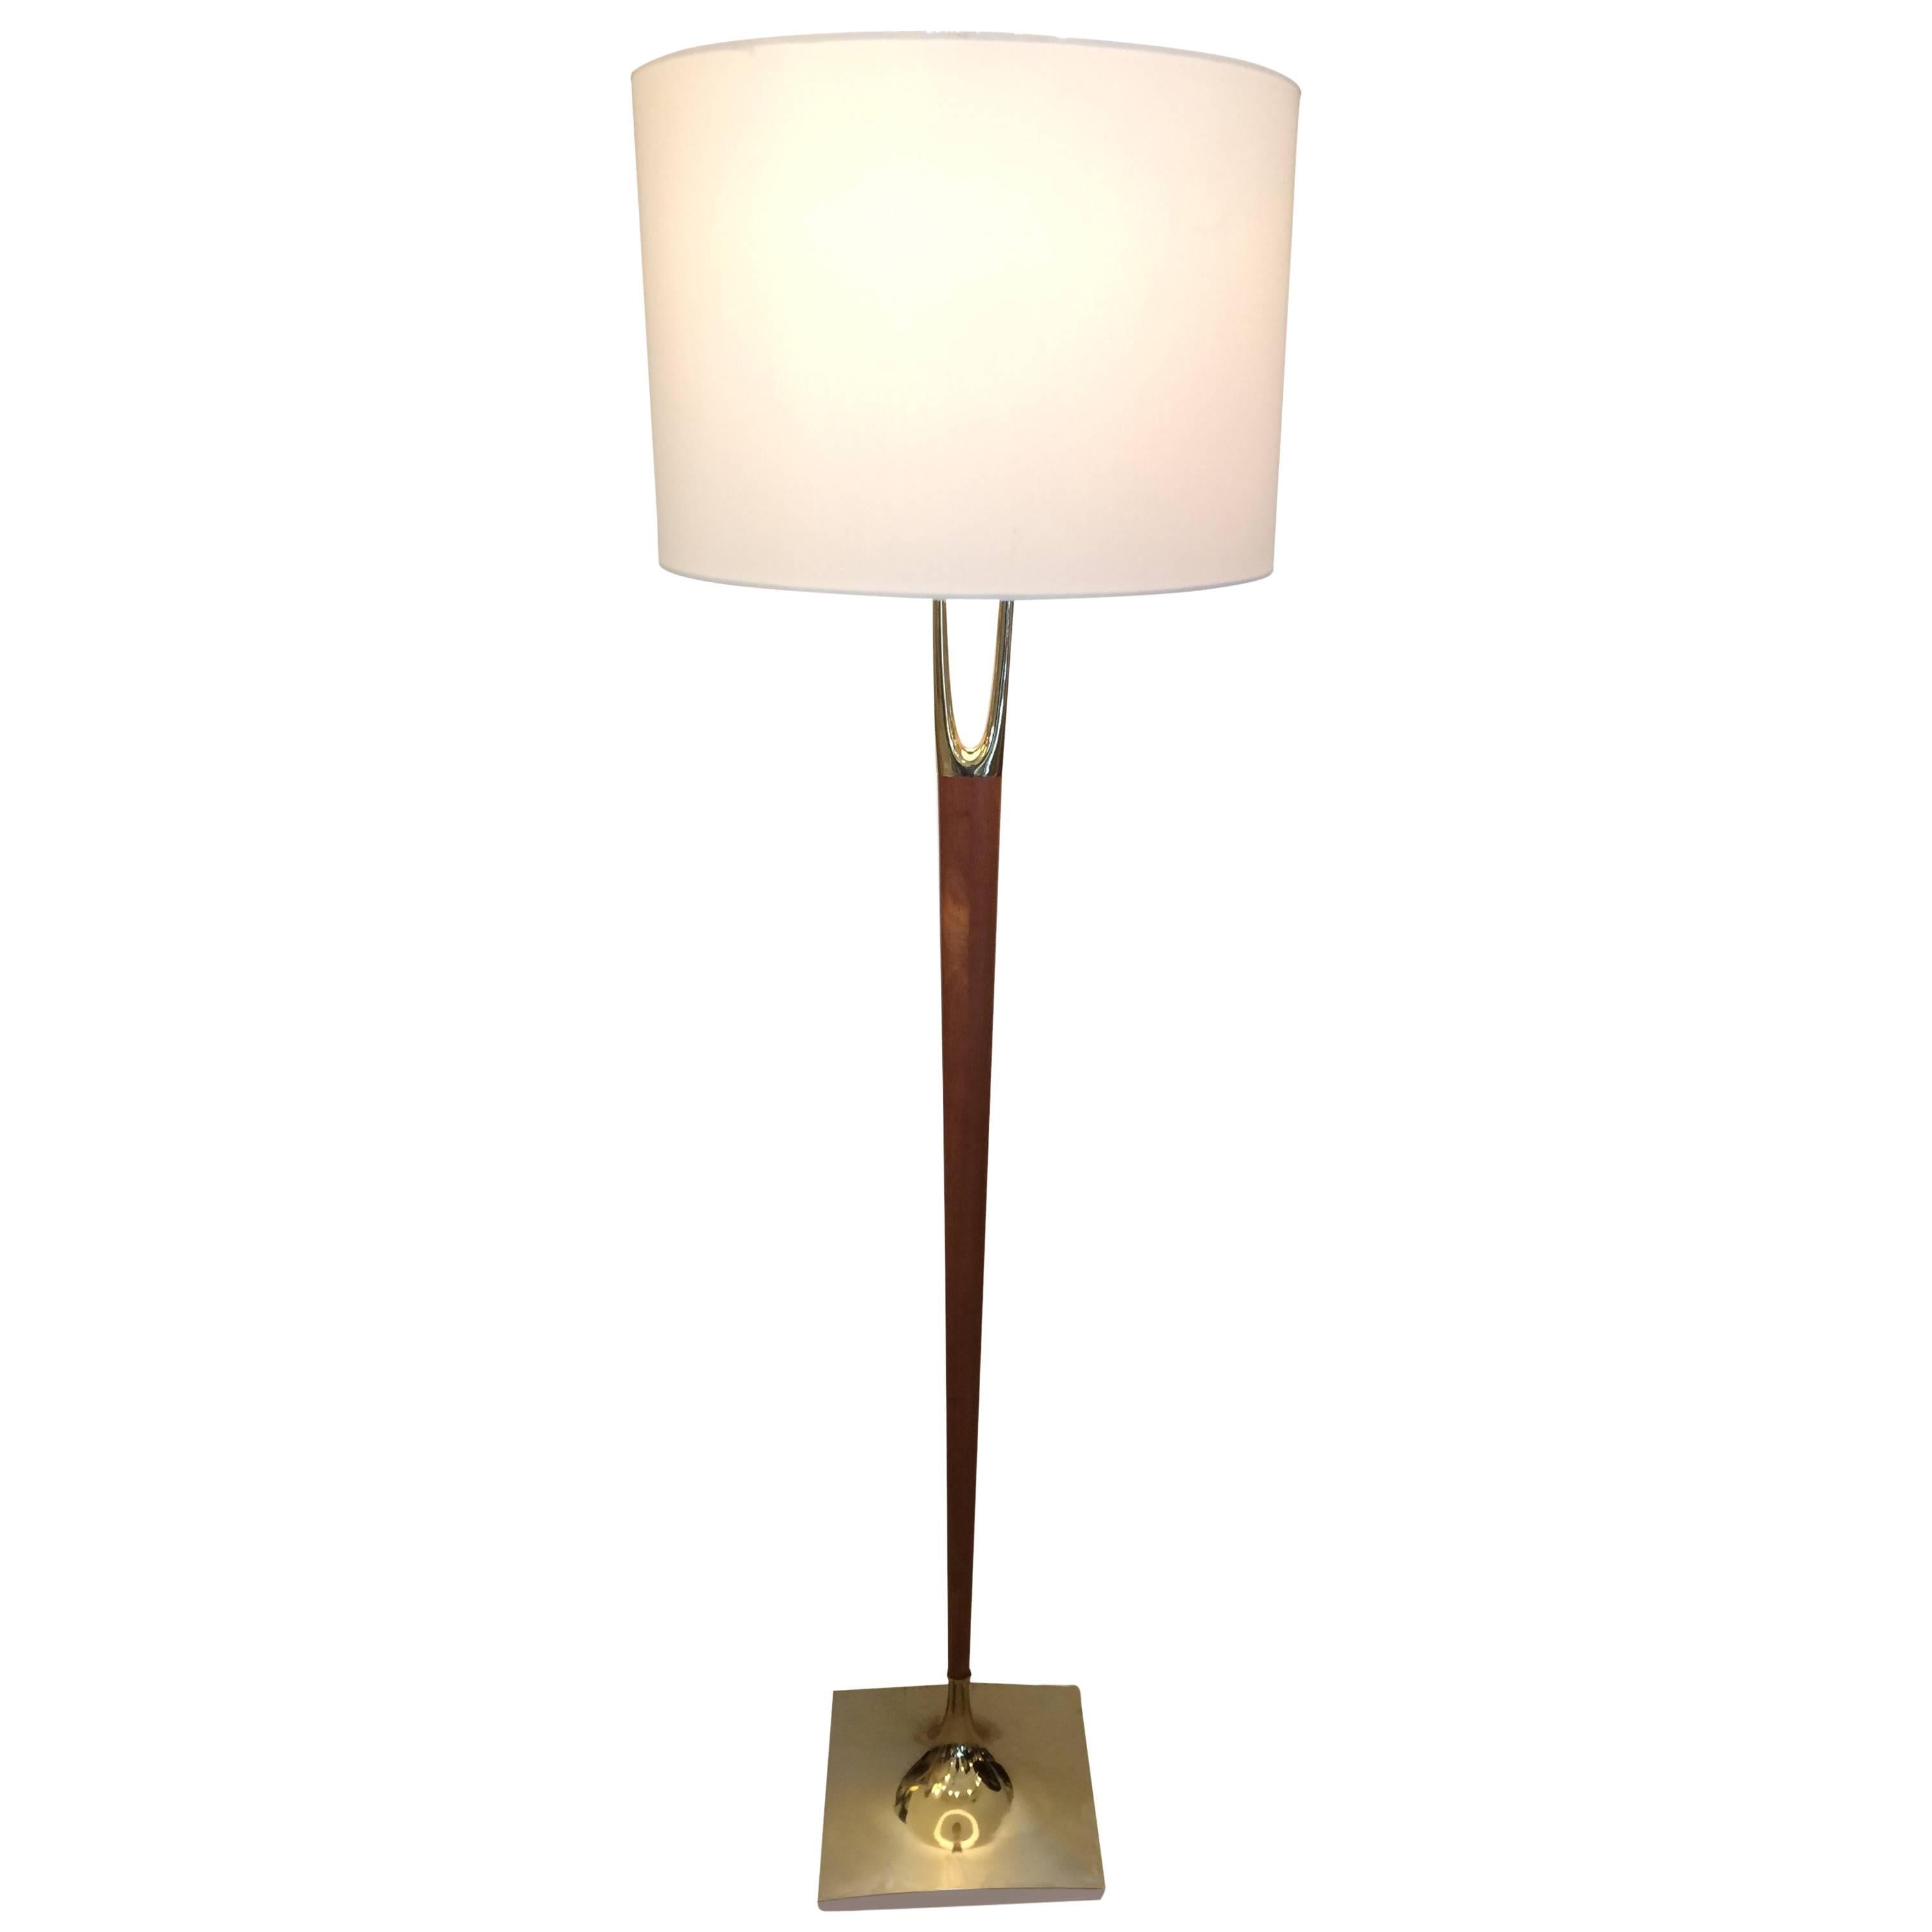 Chic Mid-Century Modern Wishbone Style Teak and Brass Floor Lamp